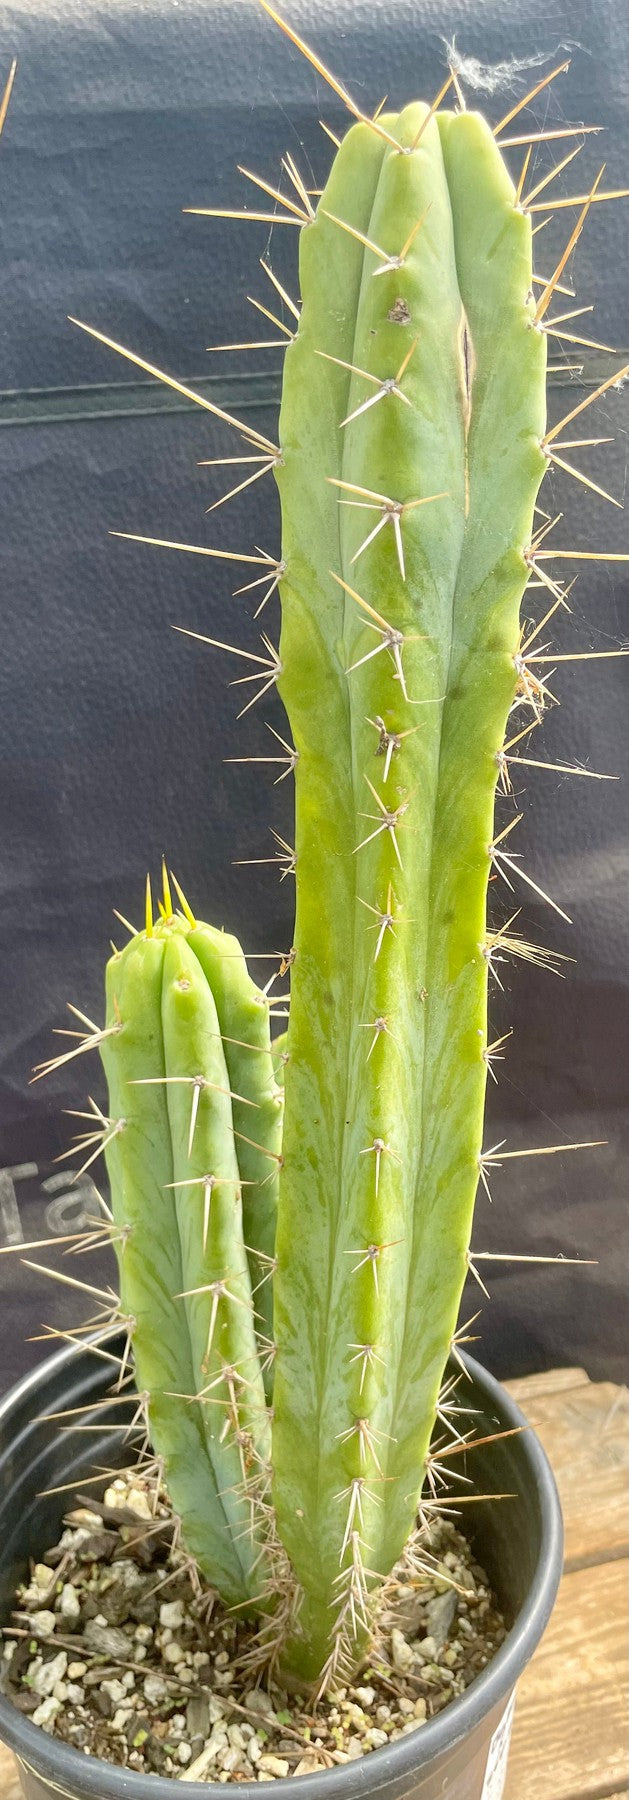 #EC224 EXACT Trichocereus Hybrid Baker X SS02 Cactus Ornamental Cactus 14.5”-Cactus - Large - Exact-The Succulent Source